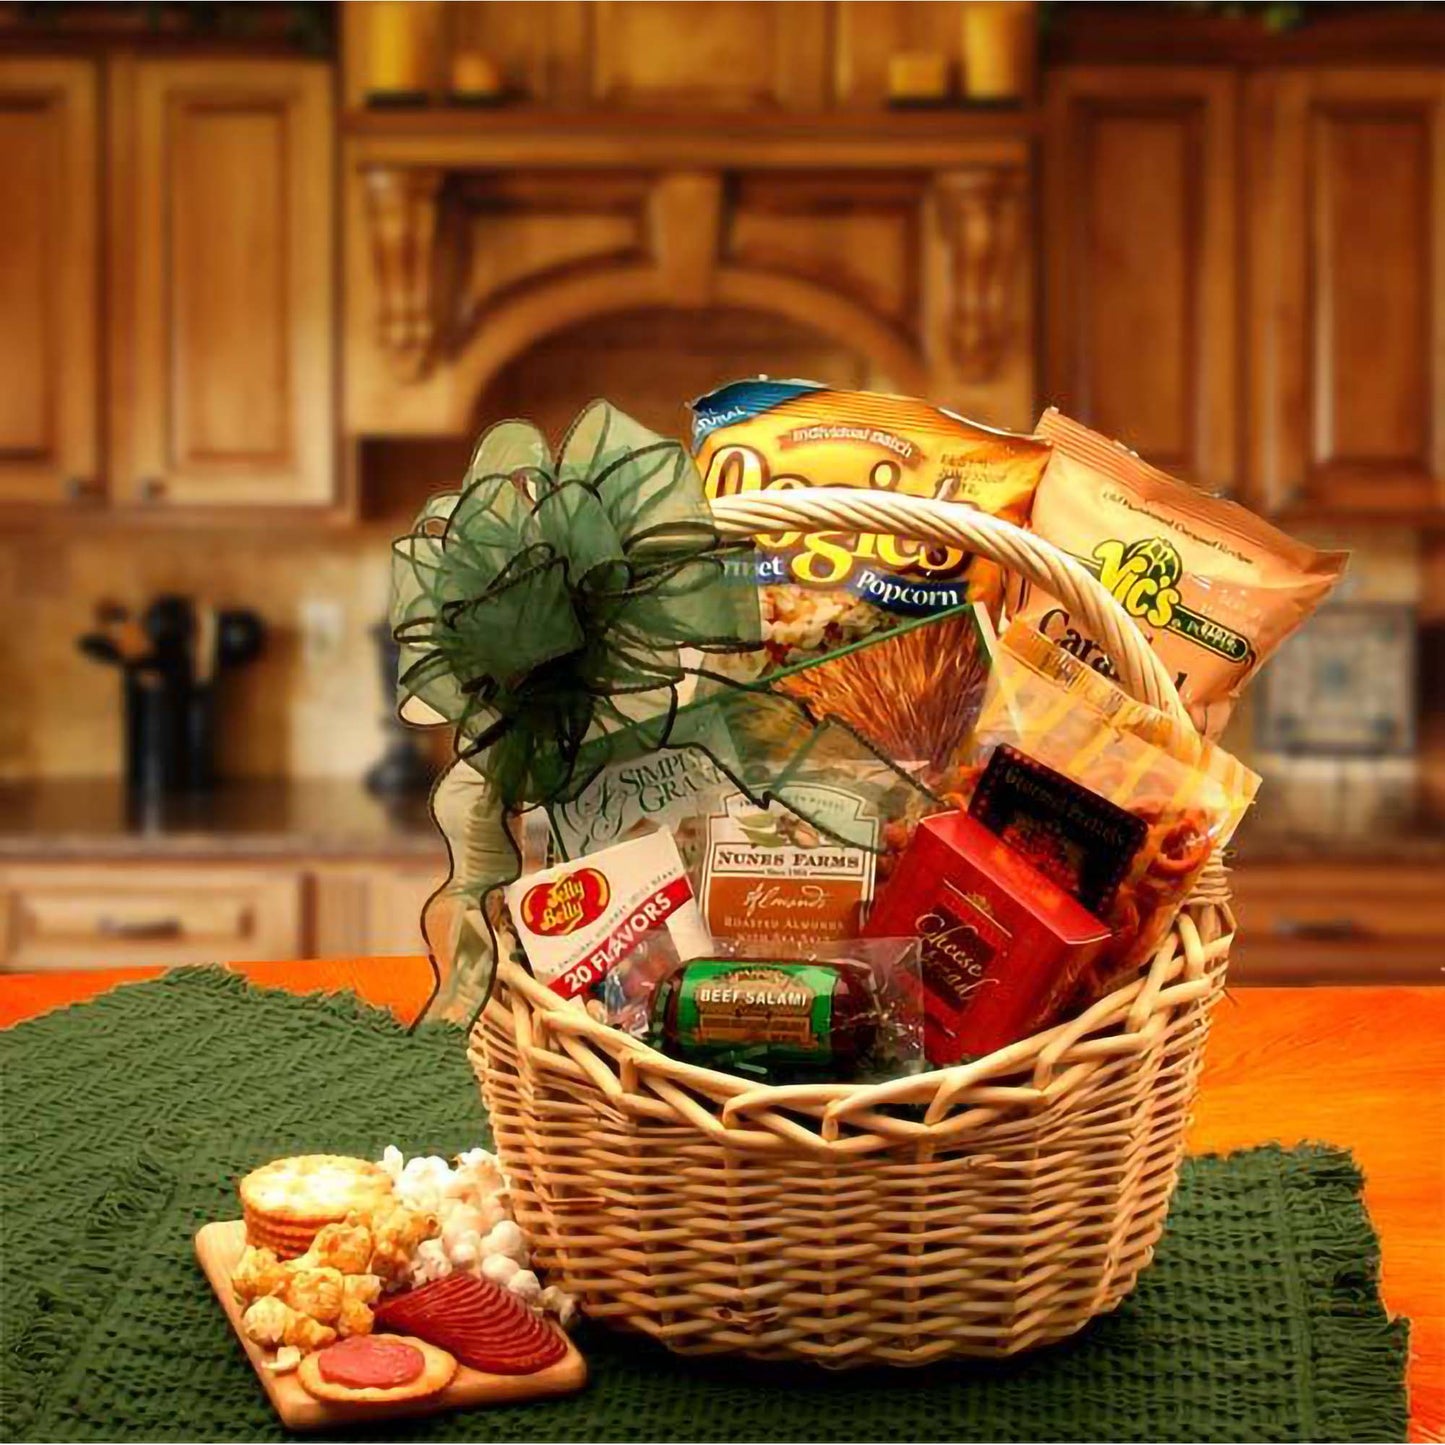 Snackers Delights Gift Basket